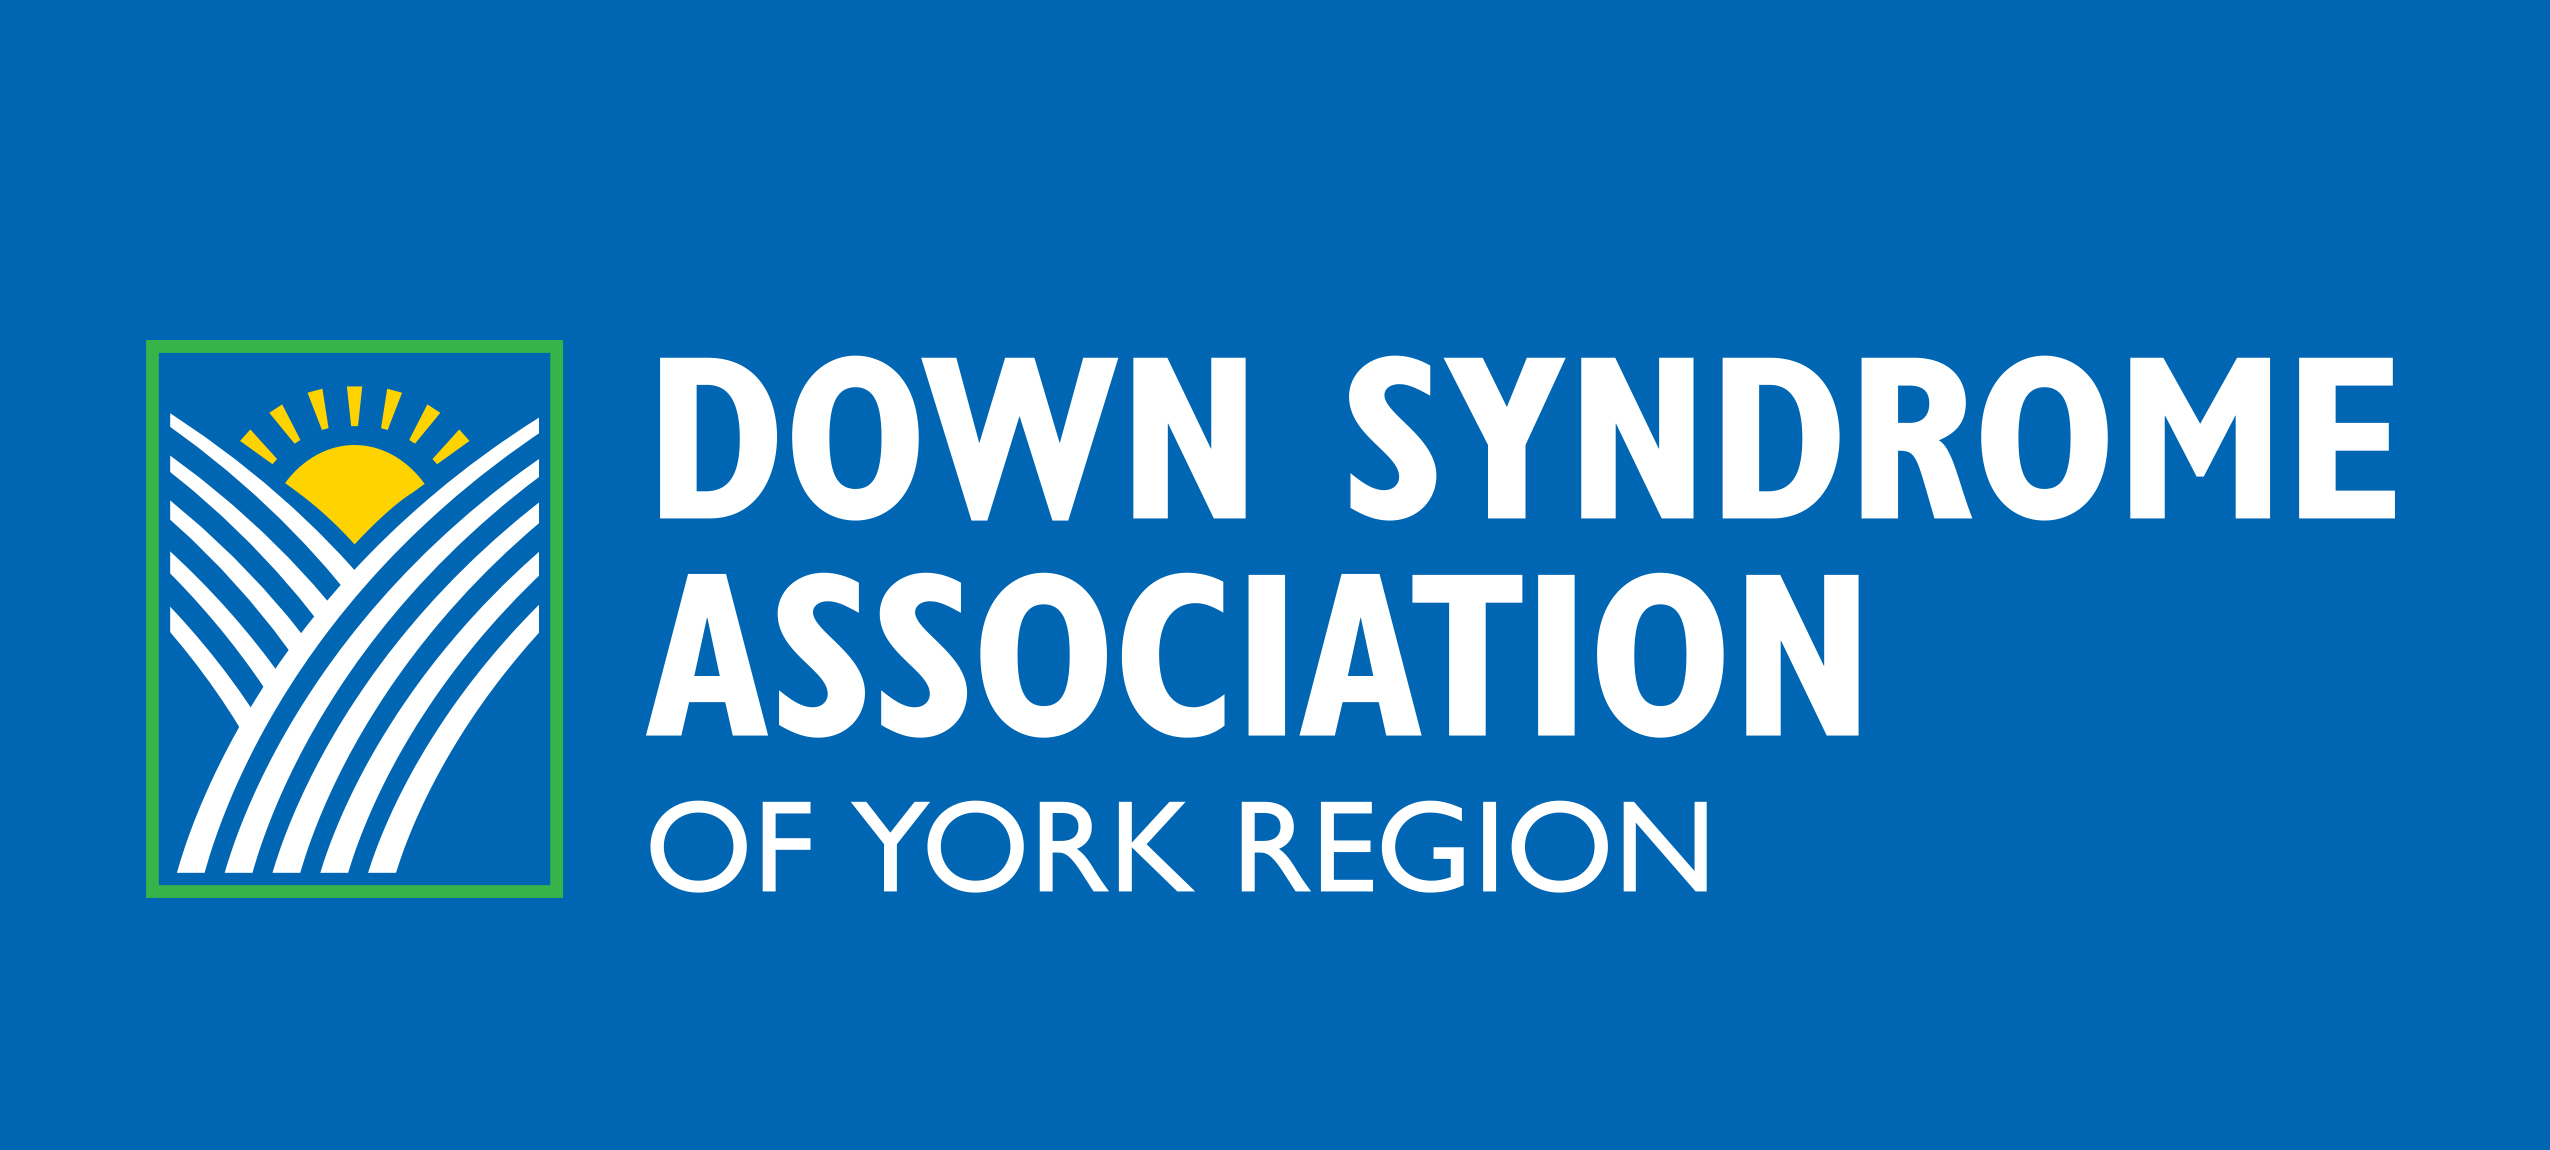 Down Syndrome Associaion of York Region